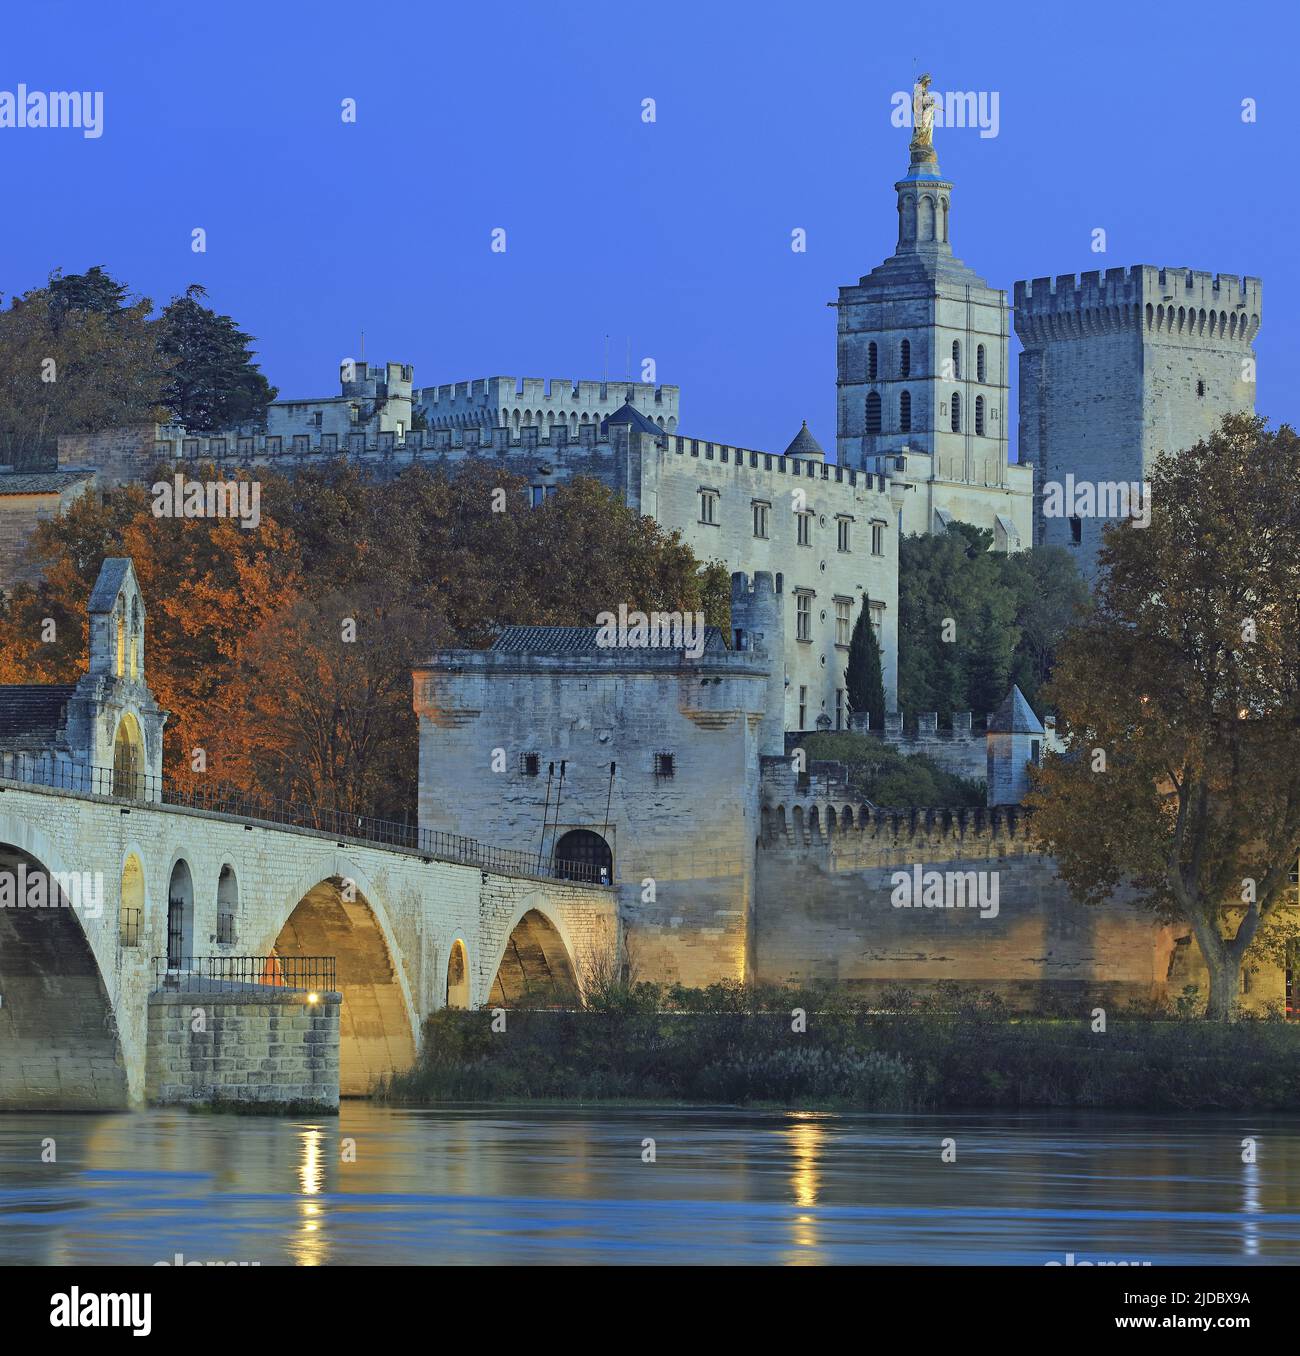 Frankreich, Vaucluse Avignon historische Stadt als UNESCO-Weltkulturerbe eingestuft Stockfoto